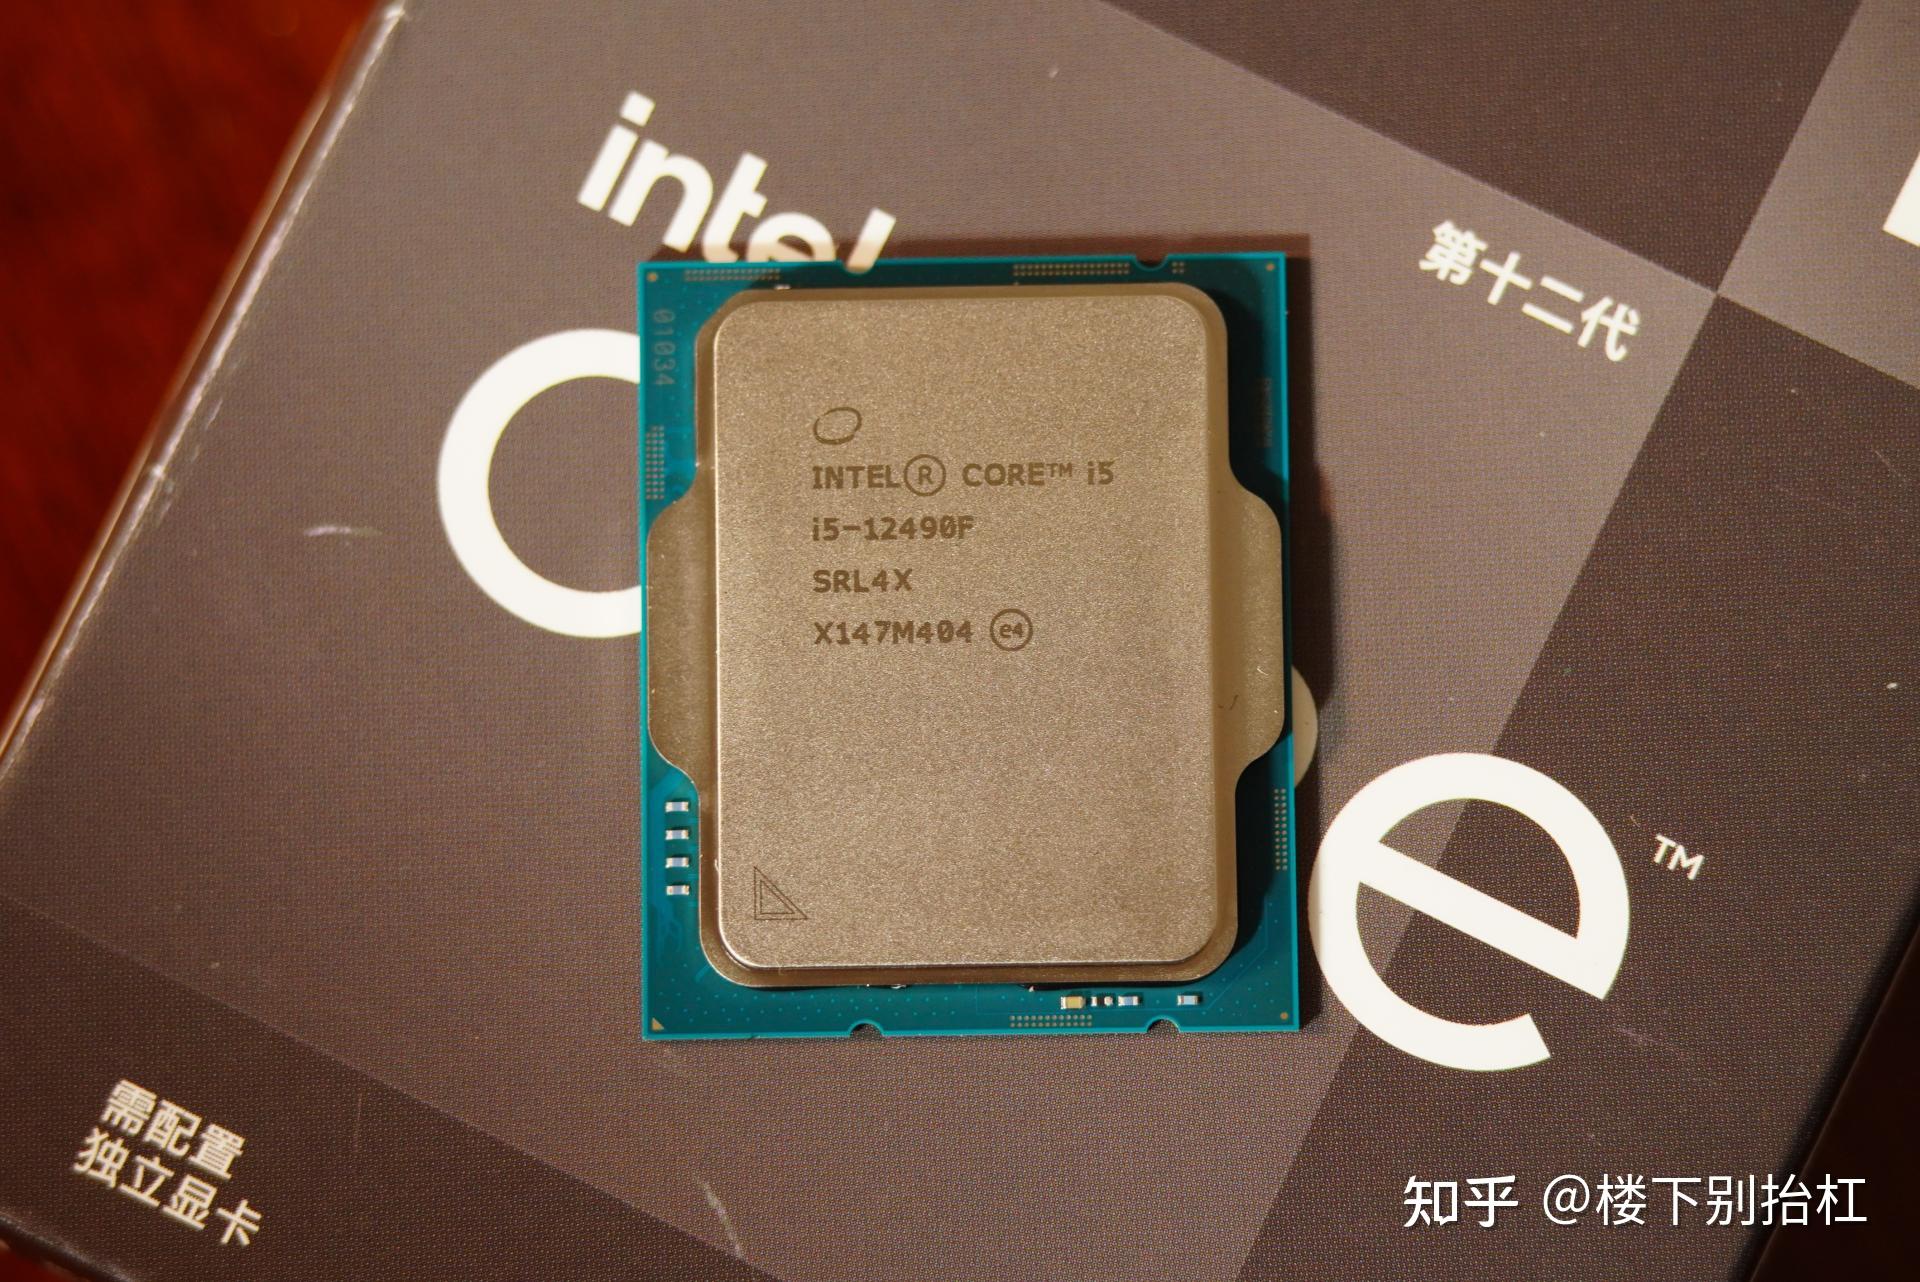 i5 处理器是否兼容 DDR3 内存？答案在这里  第4张